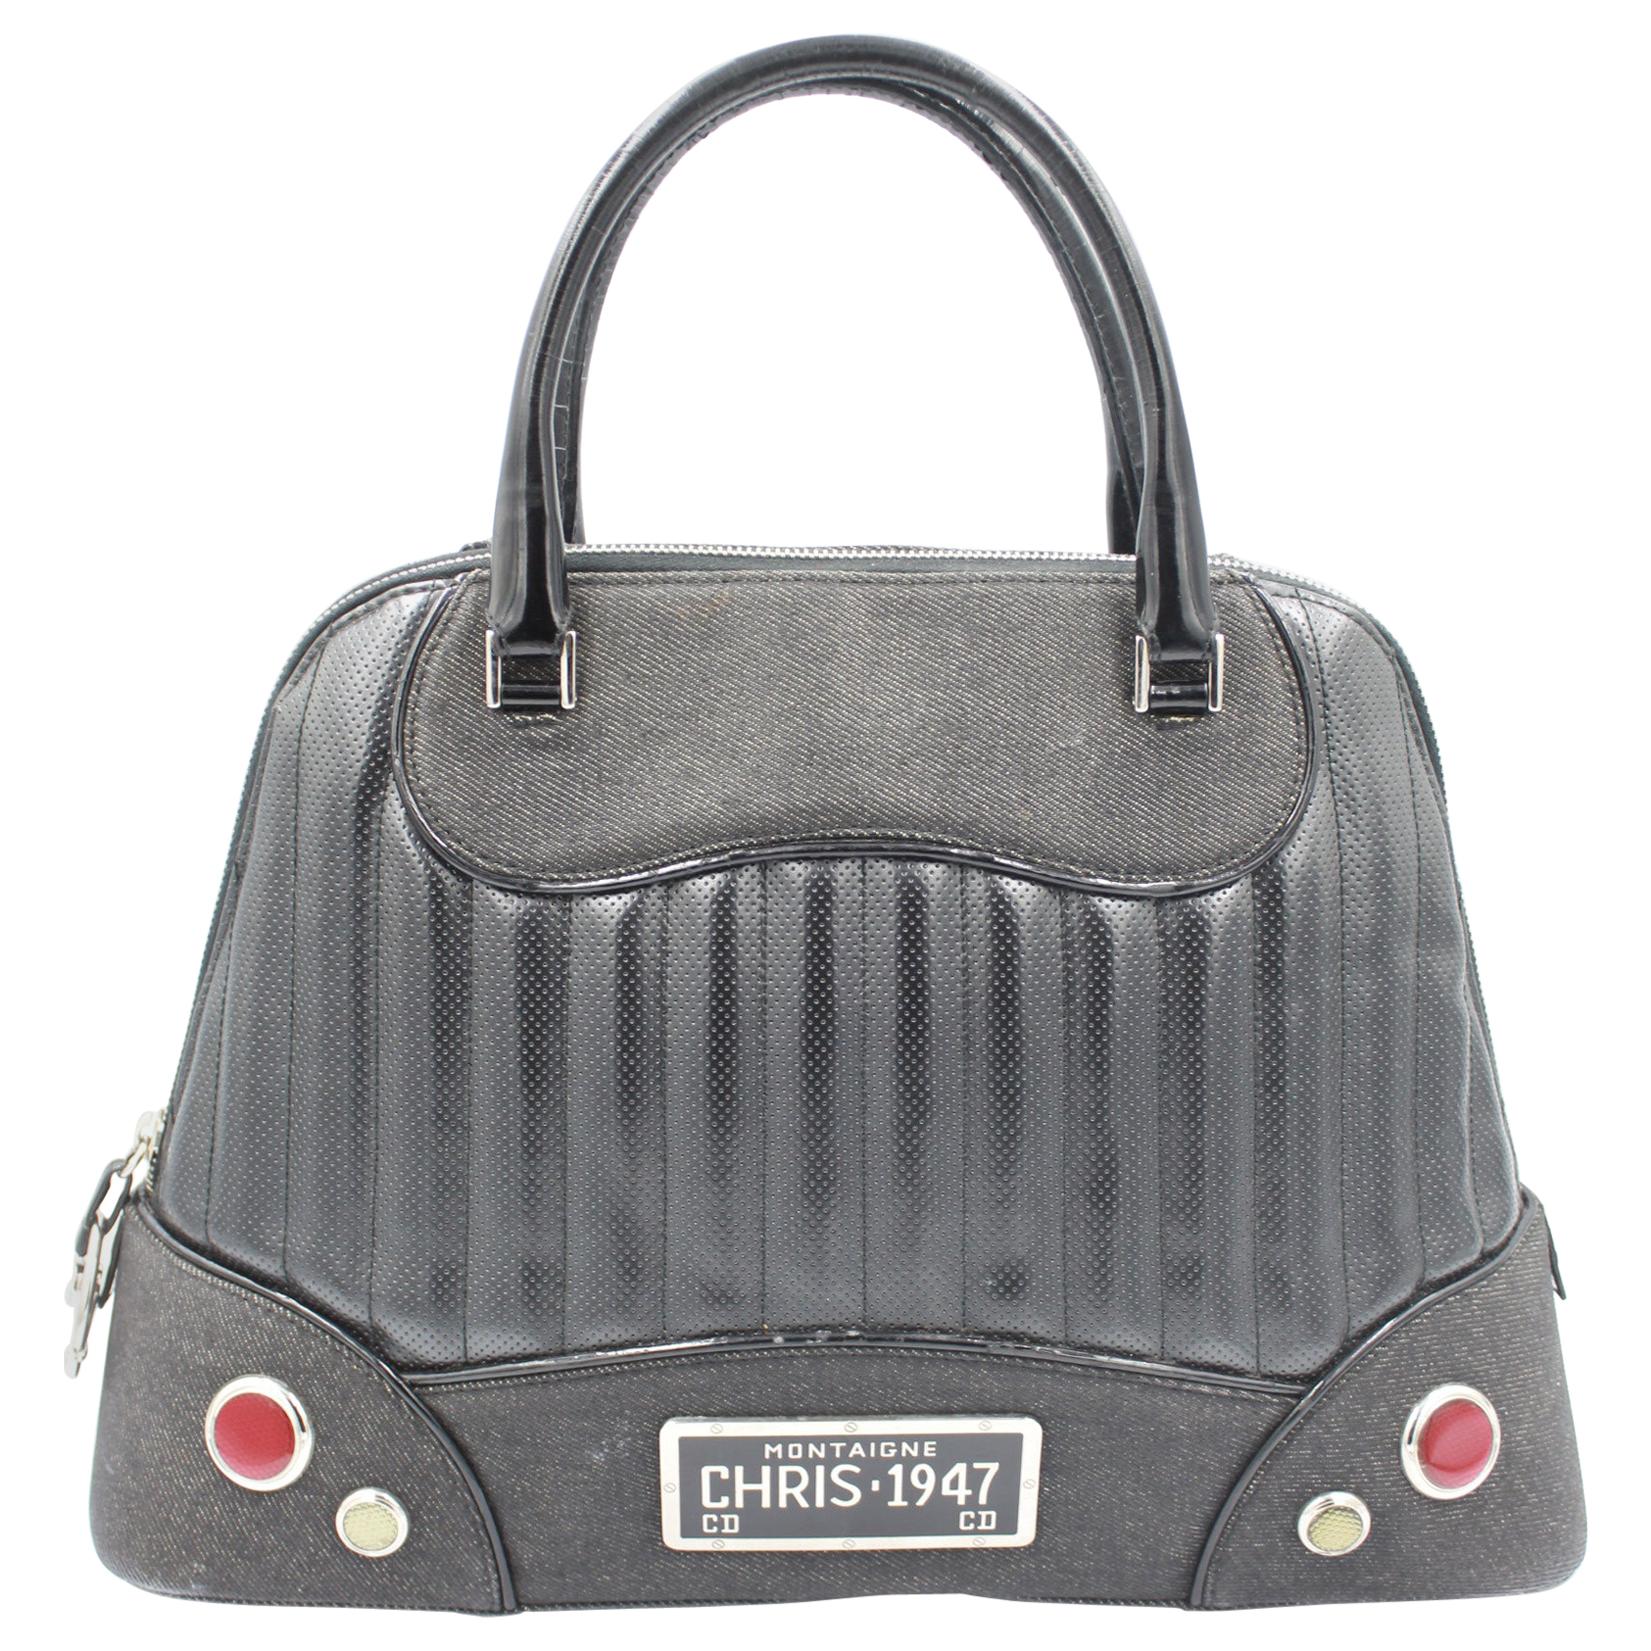 2001 Christian Dior Cadillac Top Handle Bag by John Galliano 